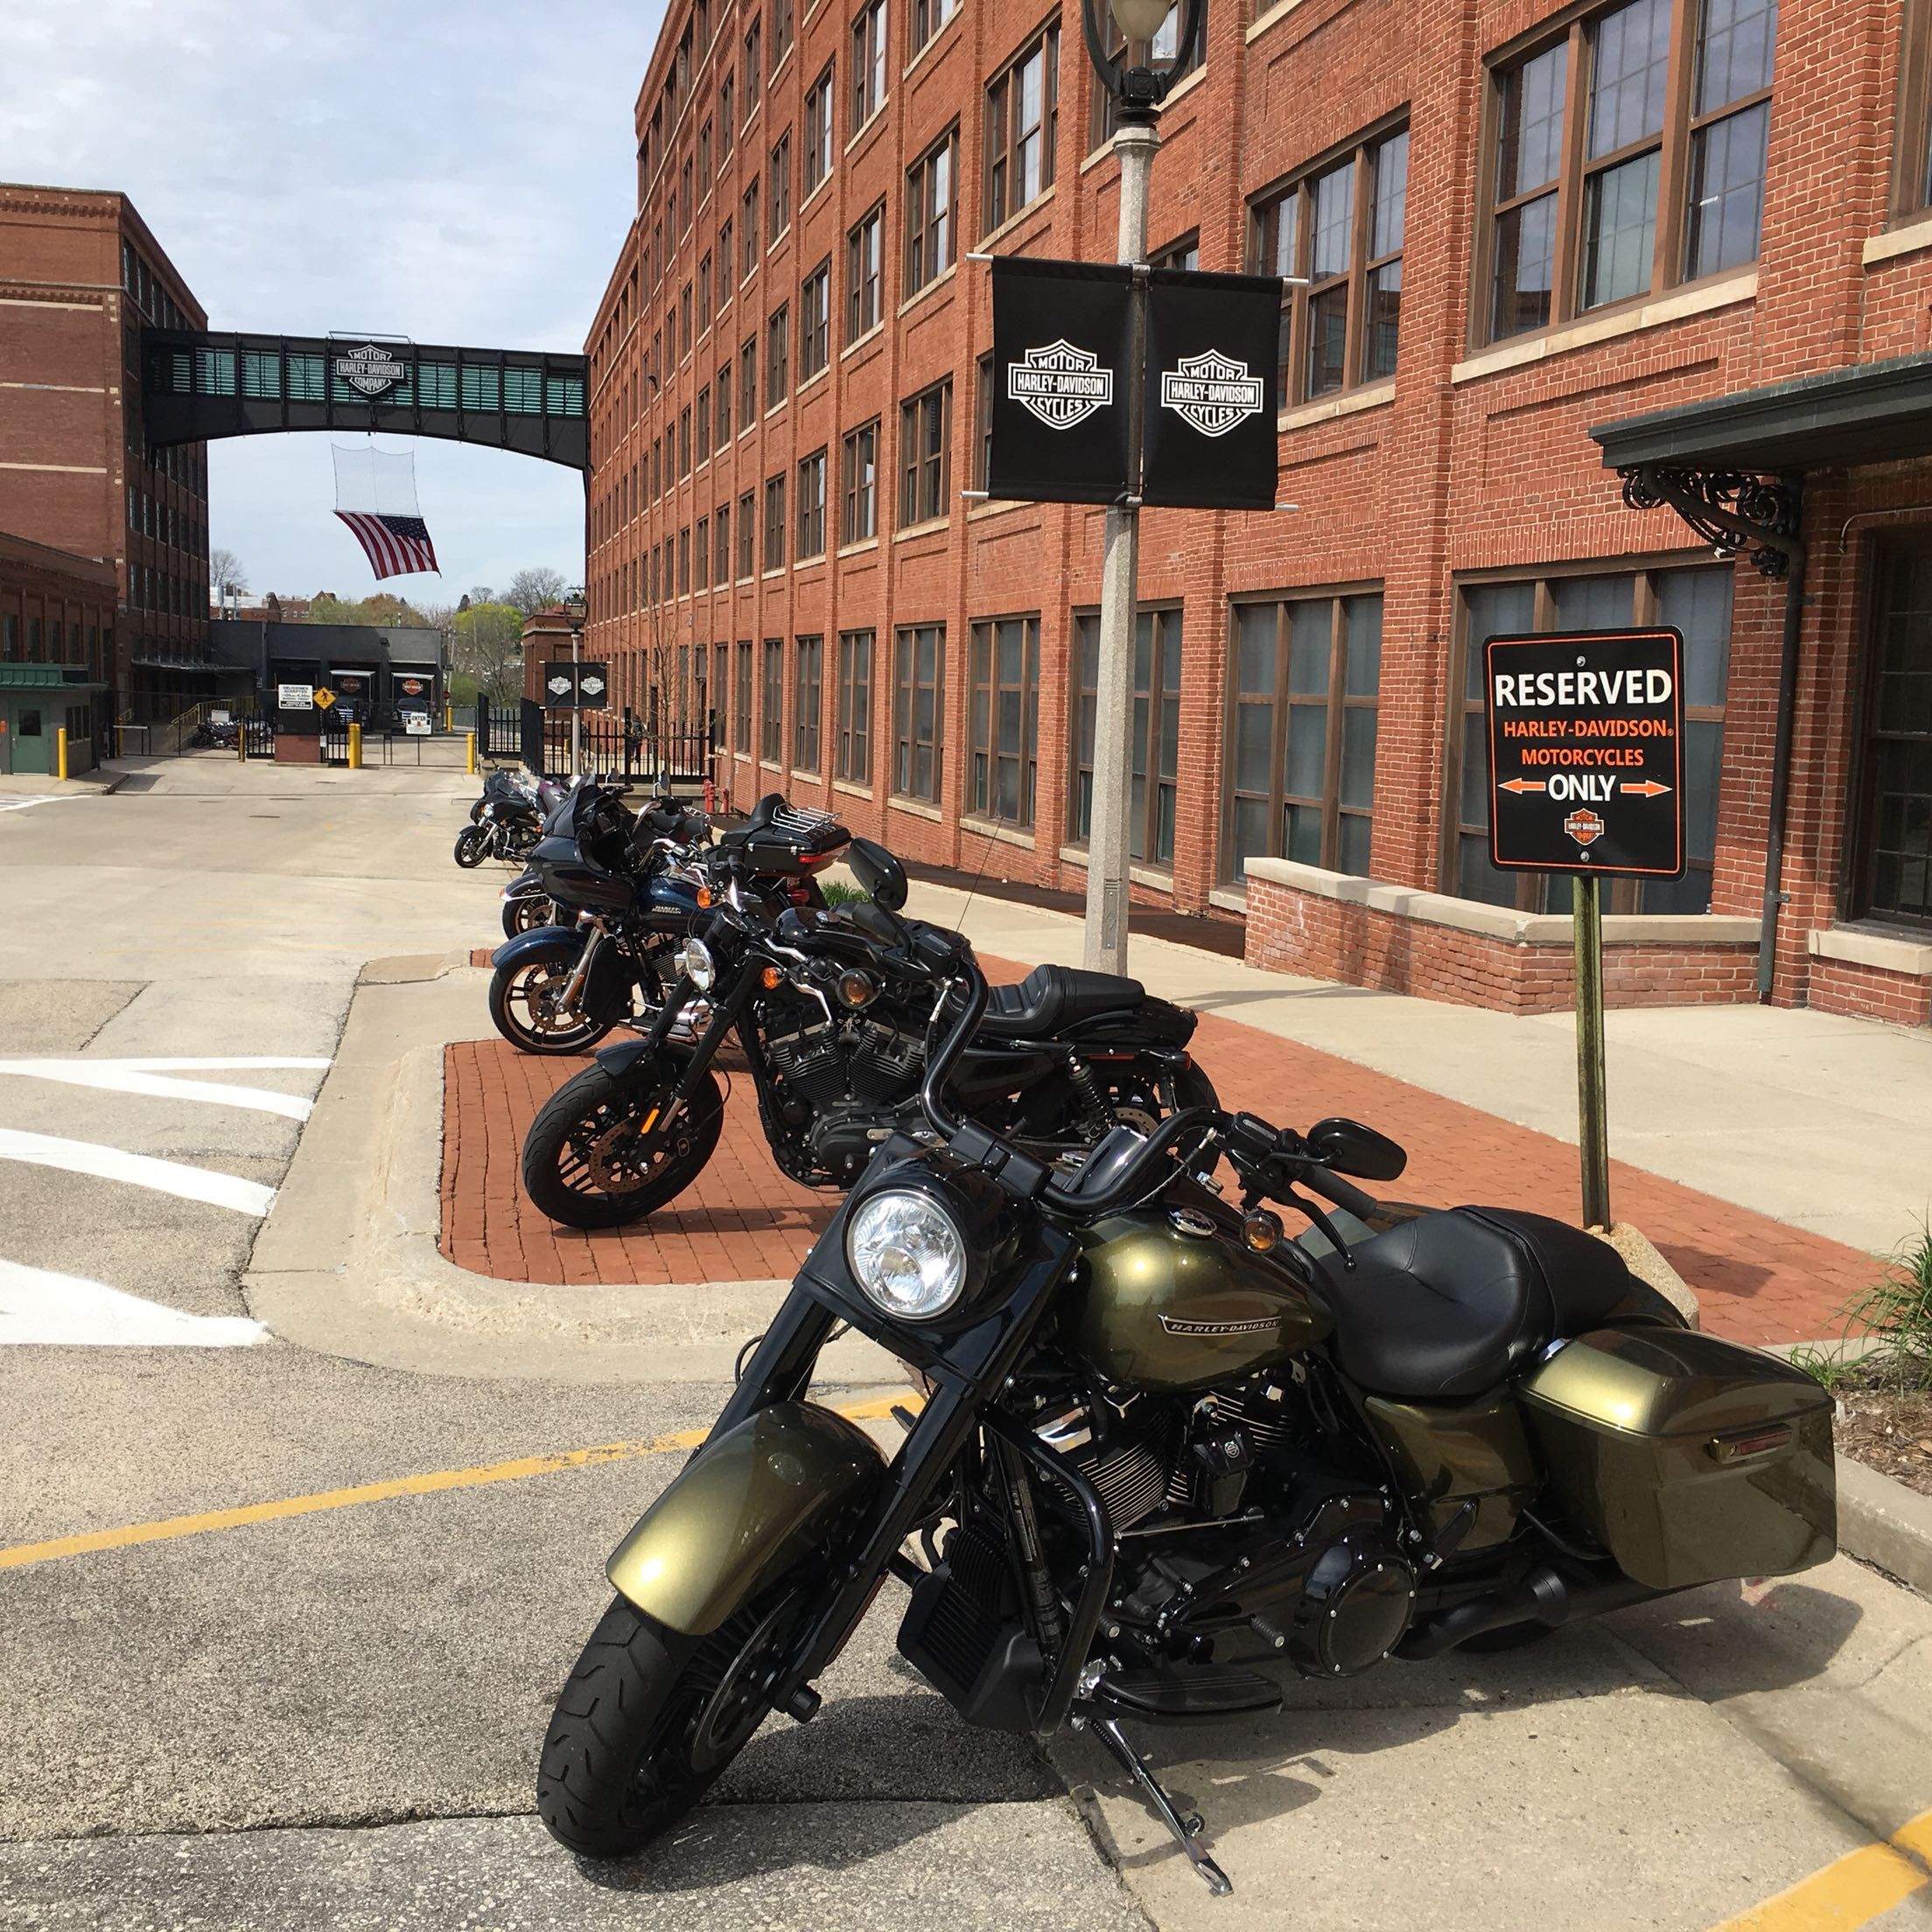 Harley Davidson Corporate